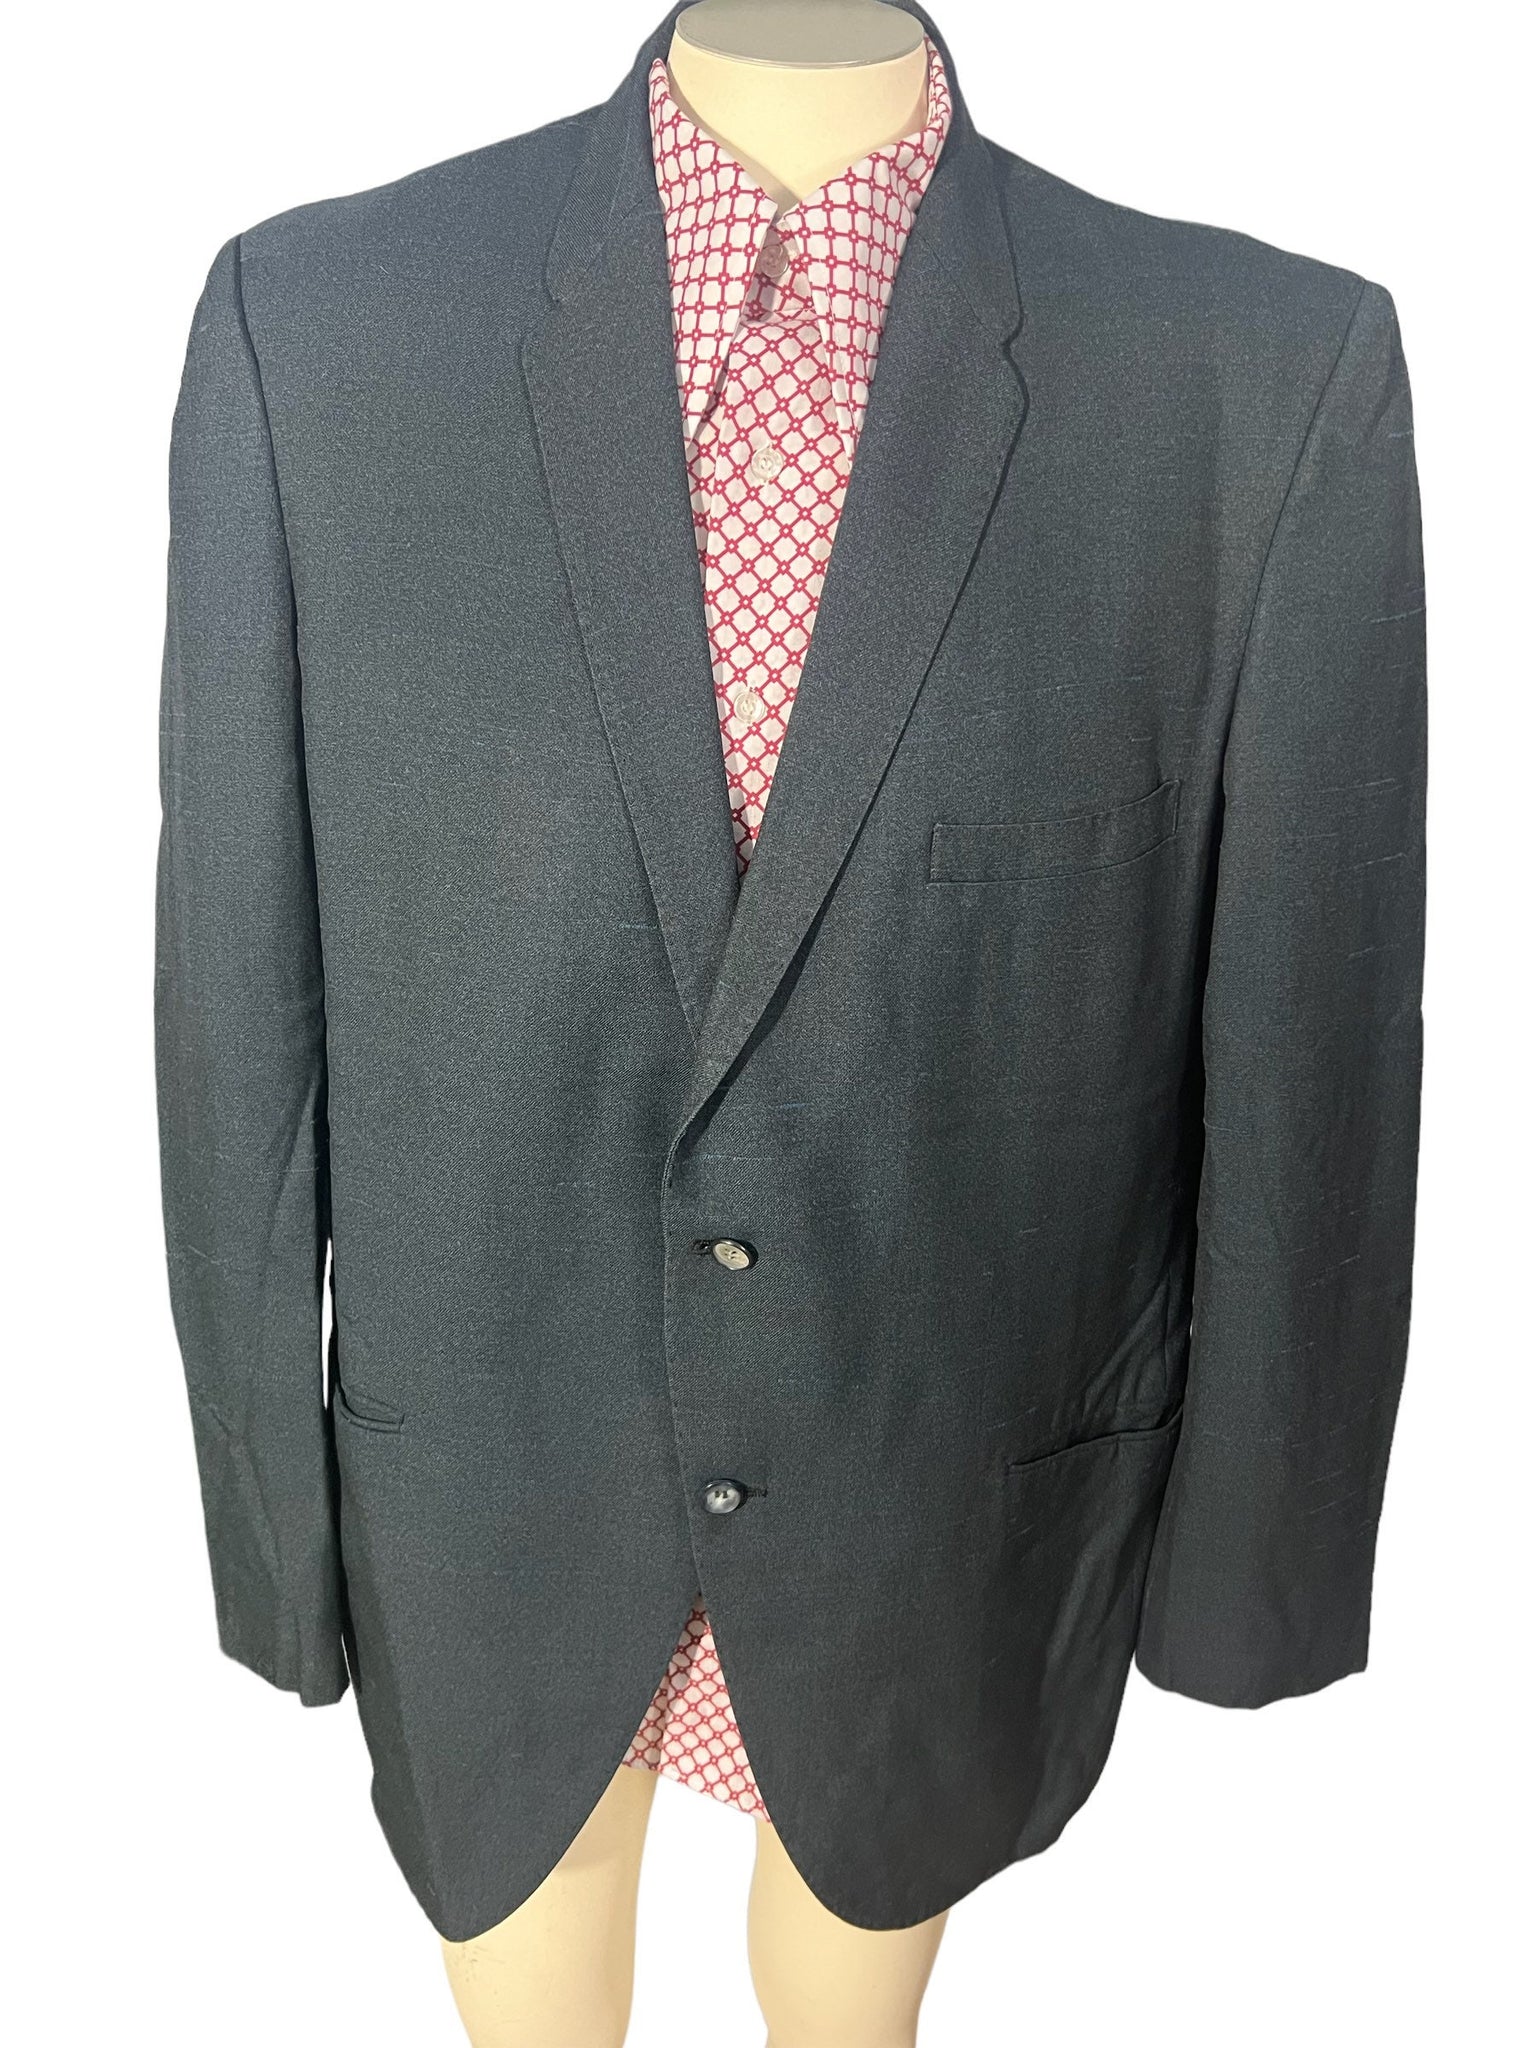 Vintage 60's Varsity flecked blue suit jacket 44 L